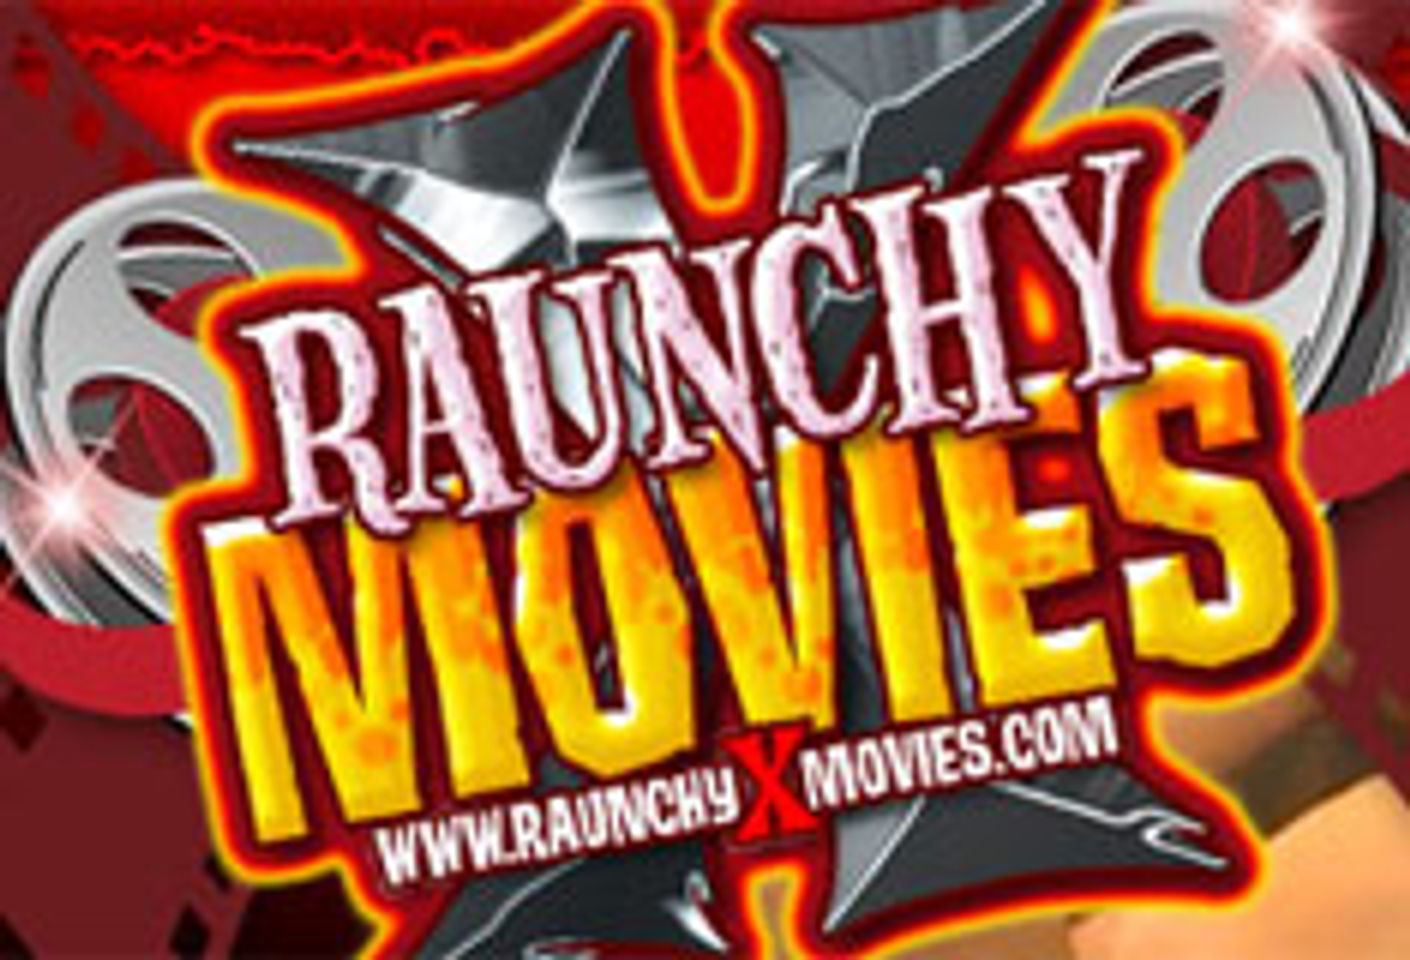 Savage Bucks Releases Raunchy X Movies